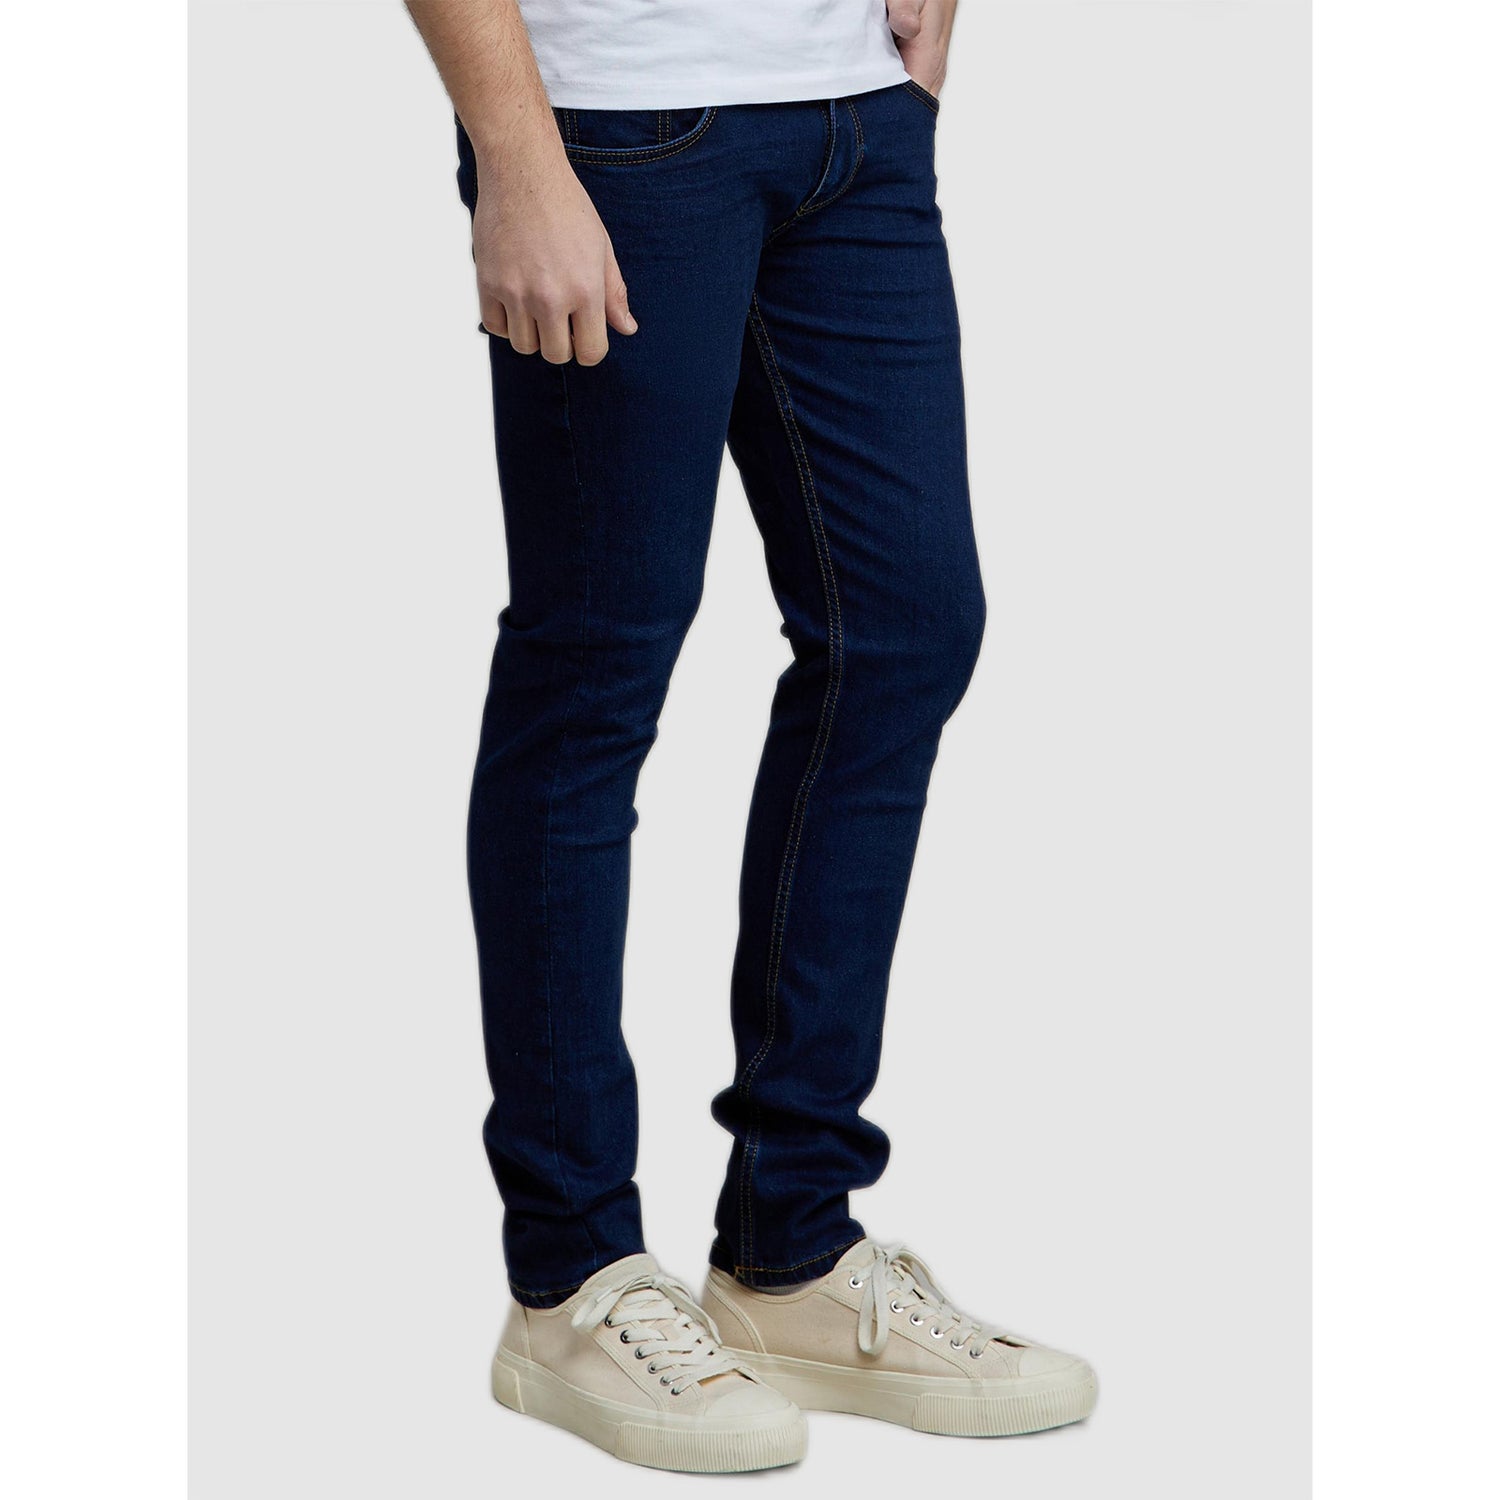 Navy Blue Jean Cotton Regular Fit Stretchable Jeans (COECODARK225)